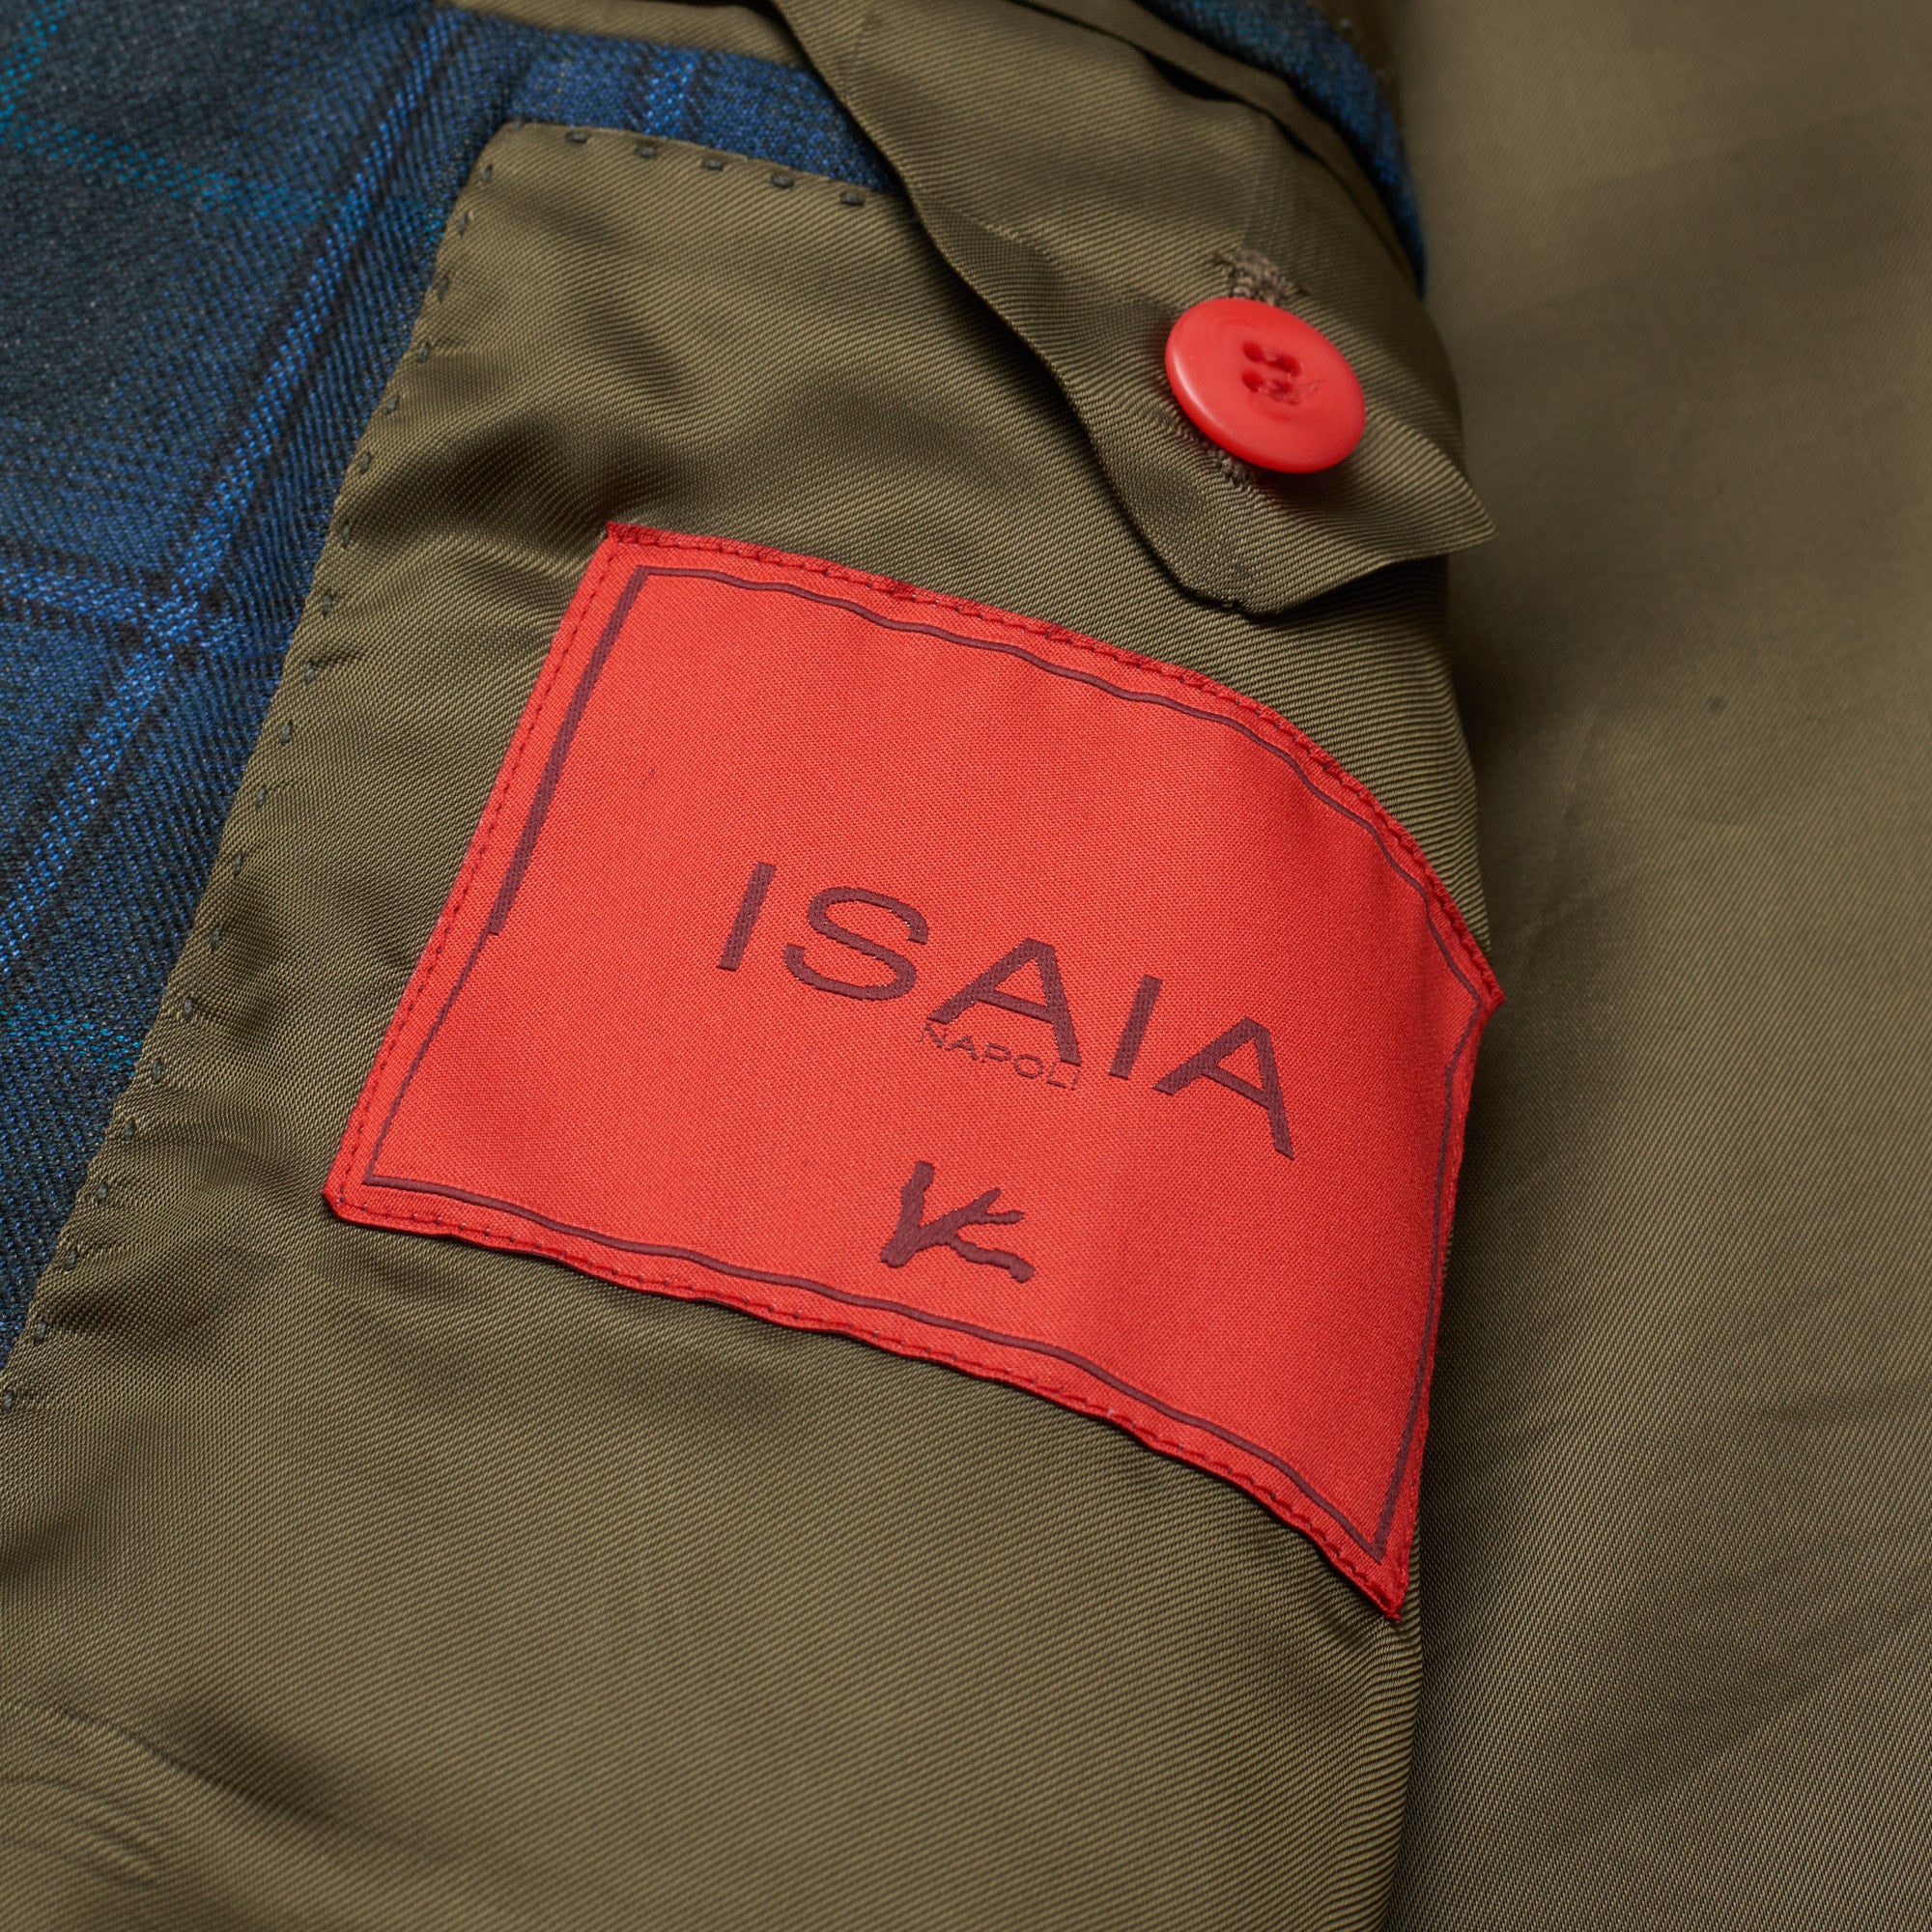 ISAIA Napoli "Base S" Handmade Tartan Plaid Cashmere-Silk Jacket 44 NEW US 34 ISAIA